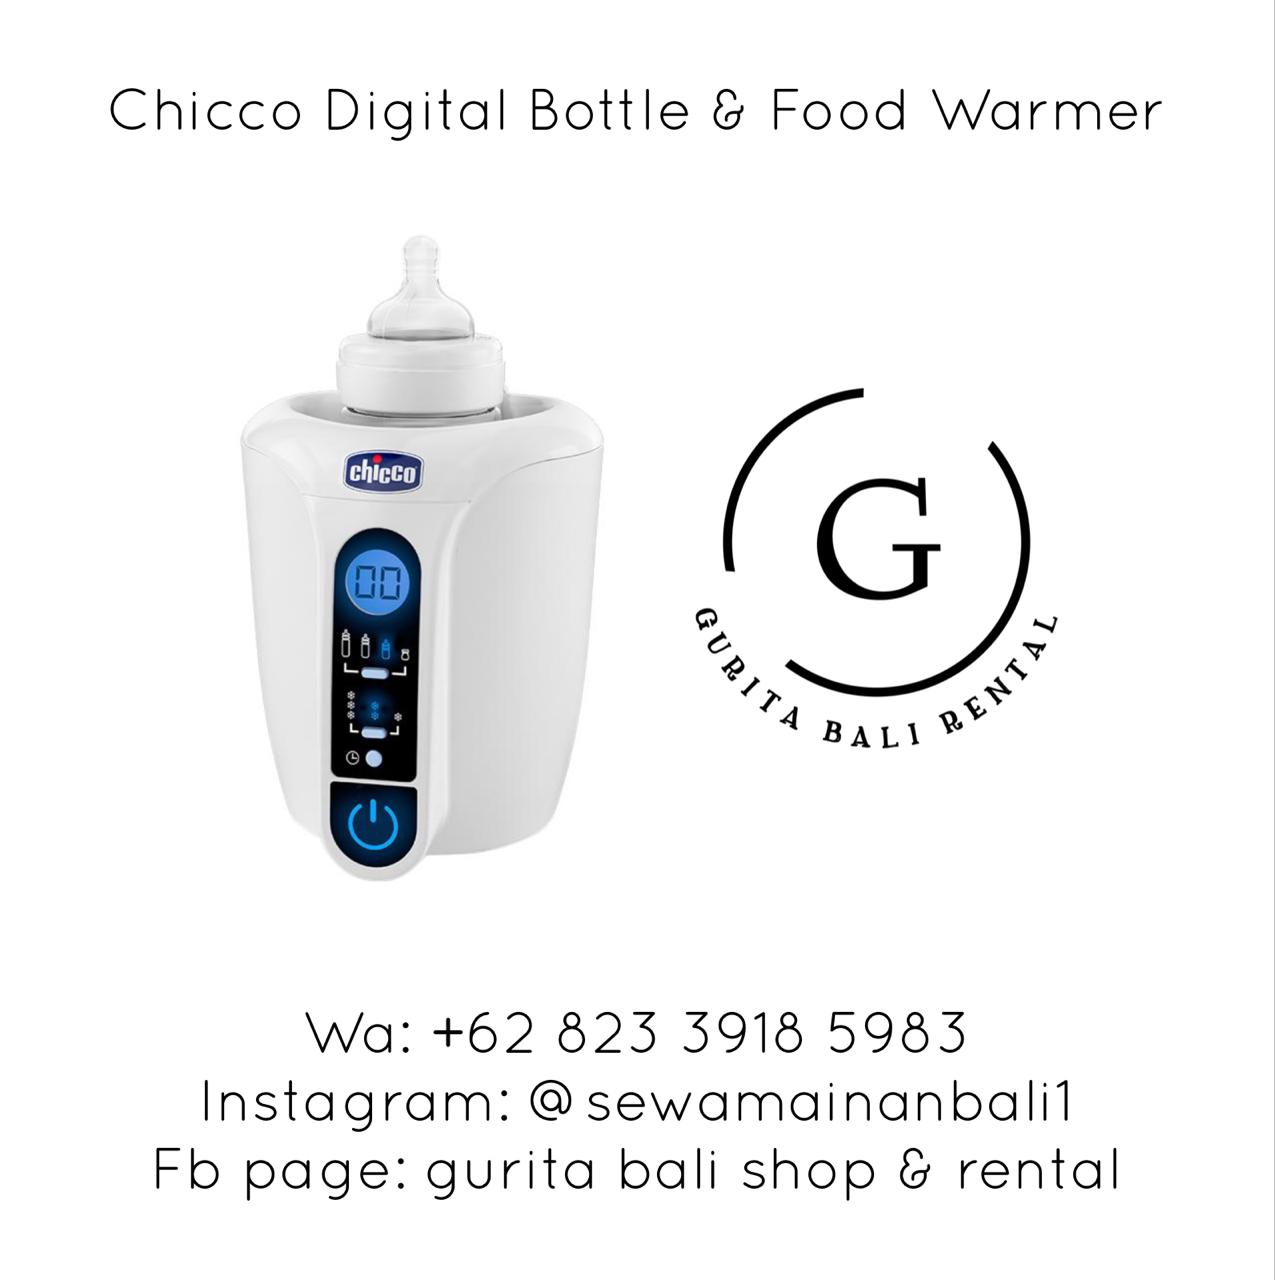 CHICCO DIGITAL BOTTLE & FOOD WARMER